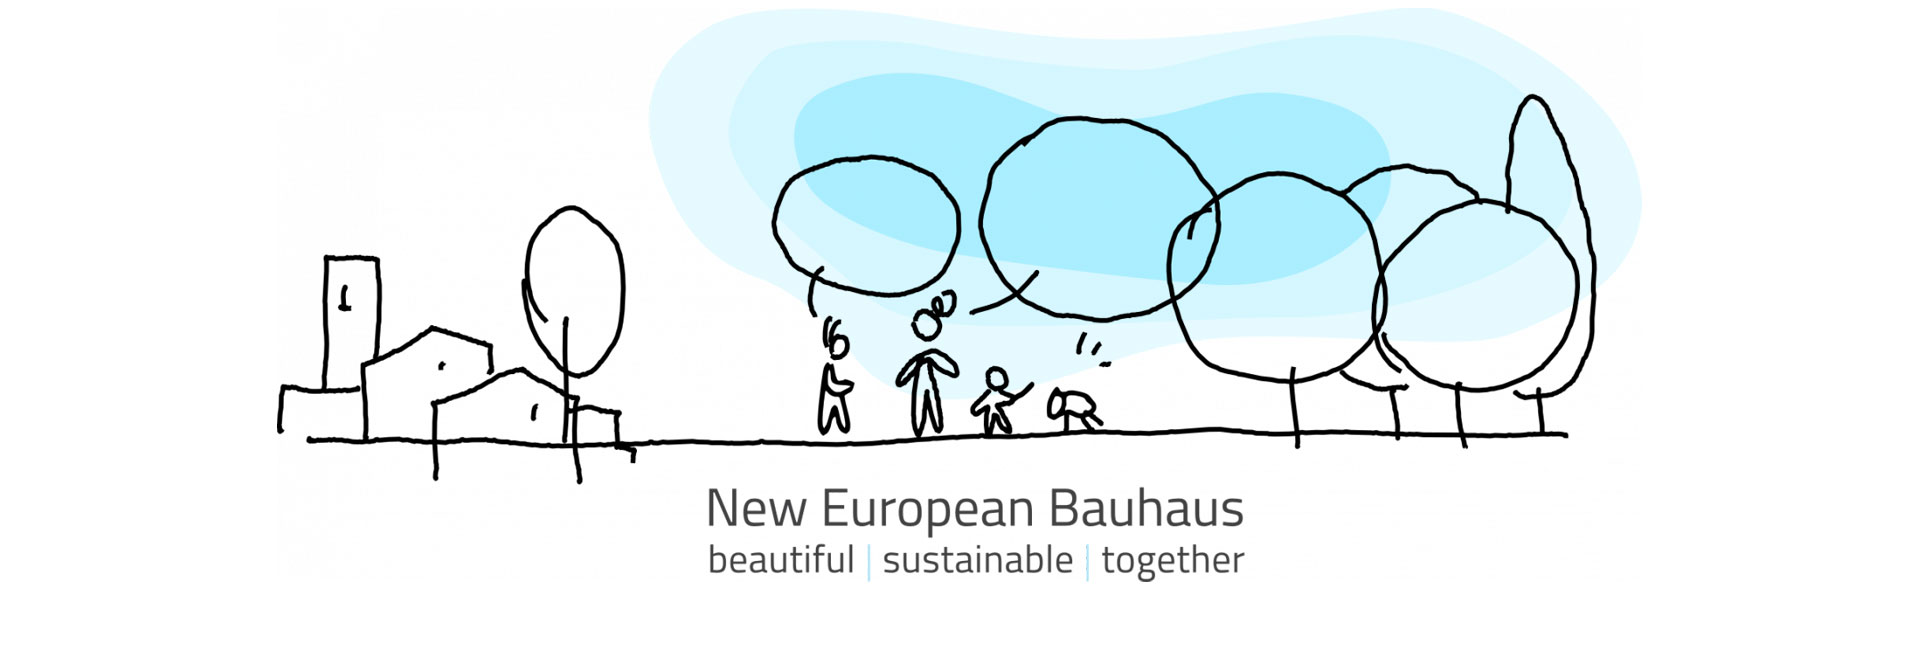 New European Bauhaus: beautiful, sustainable, together